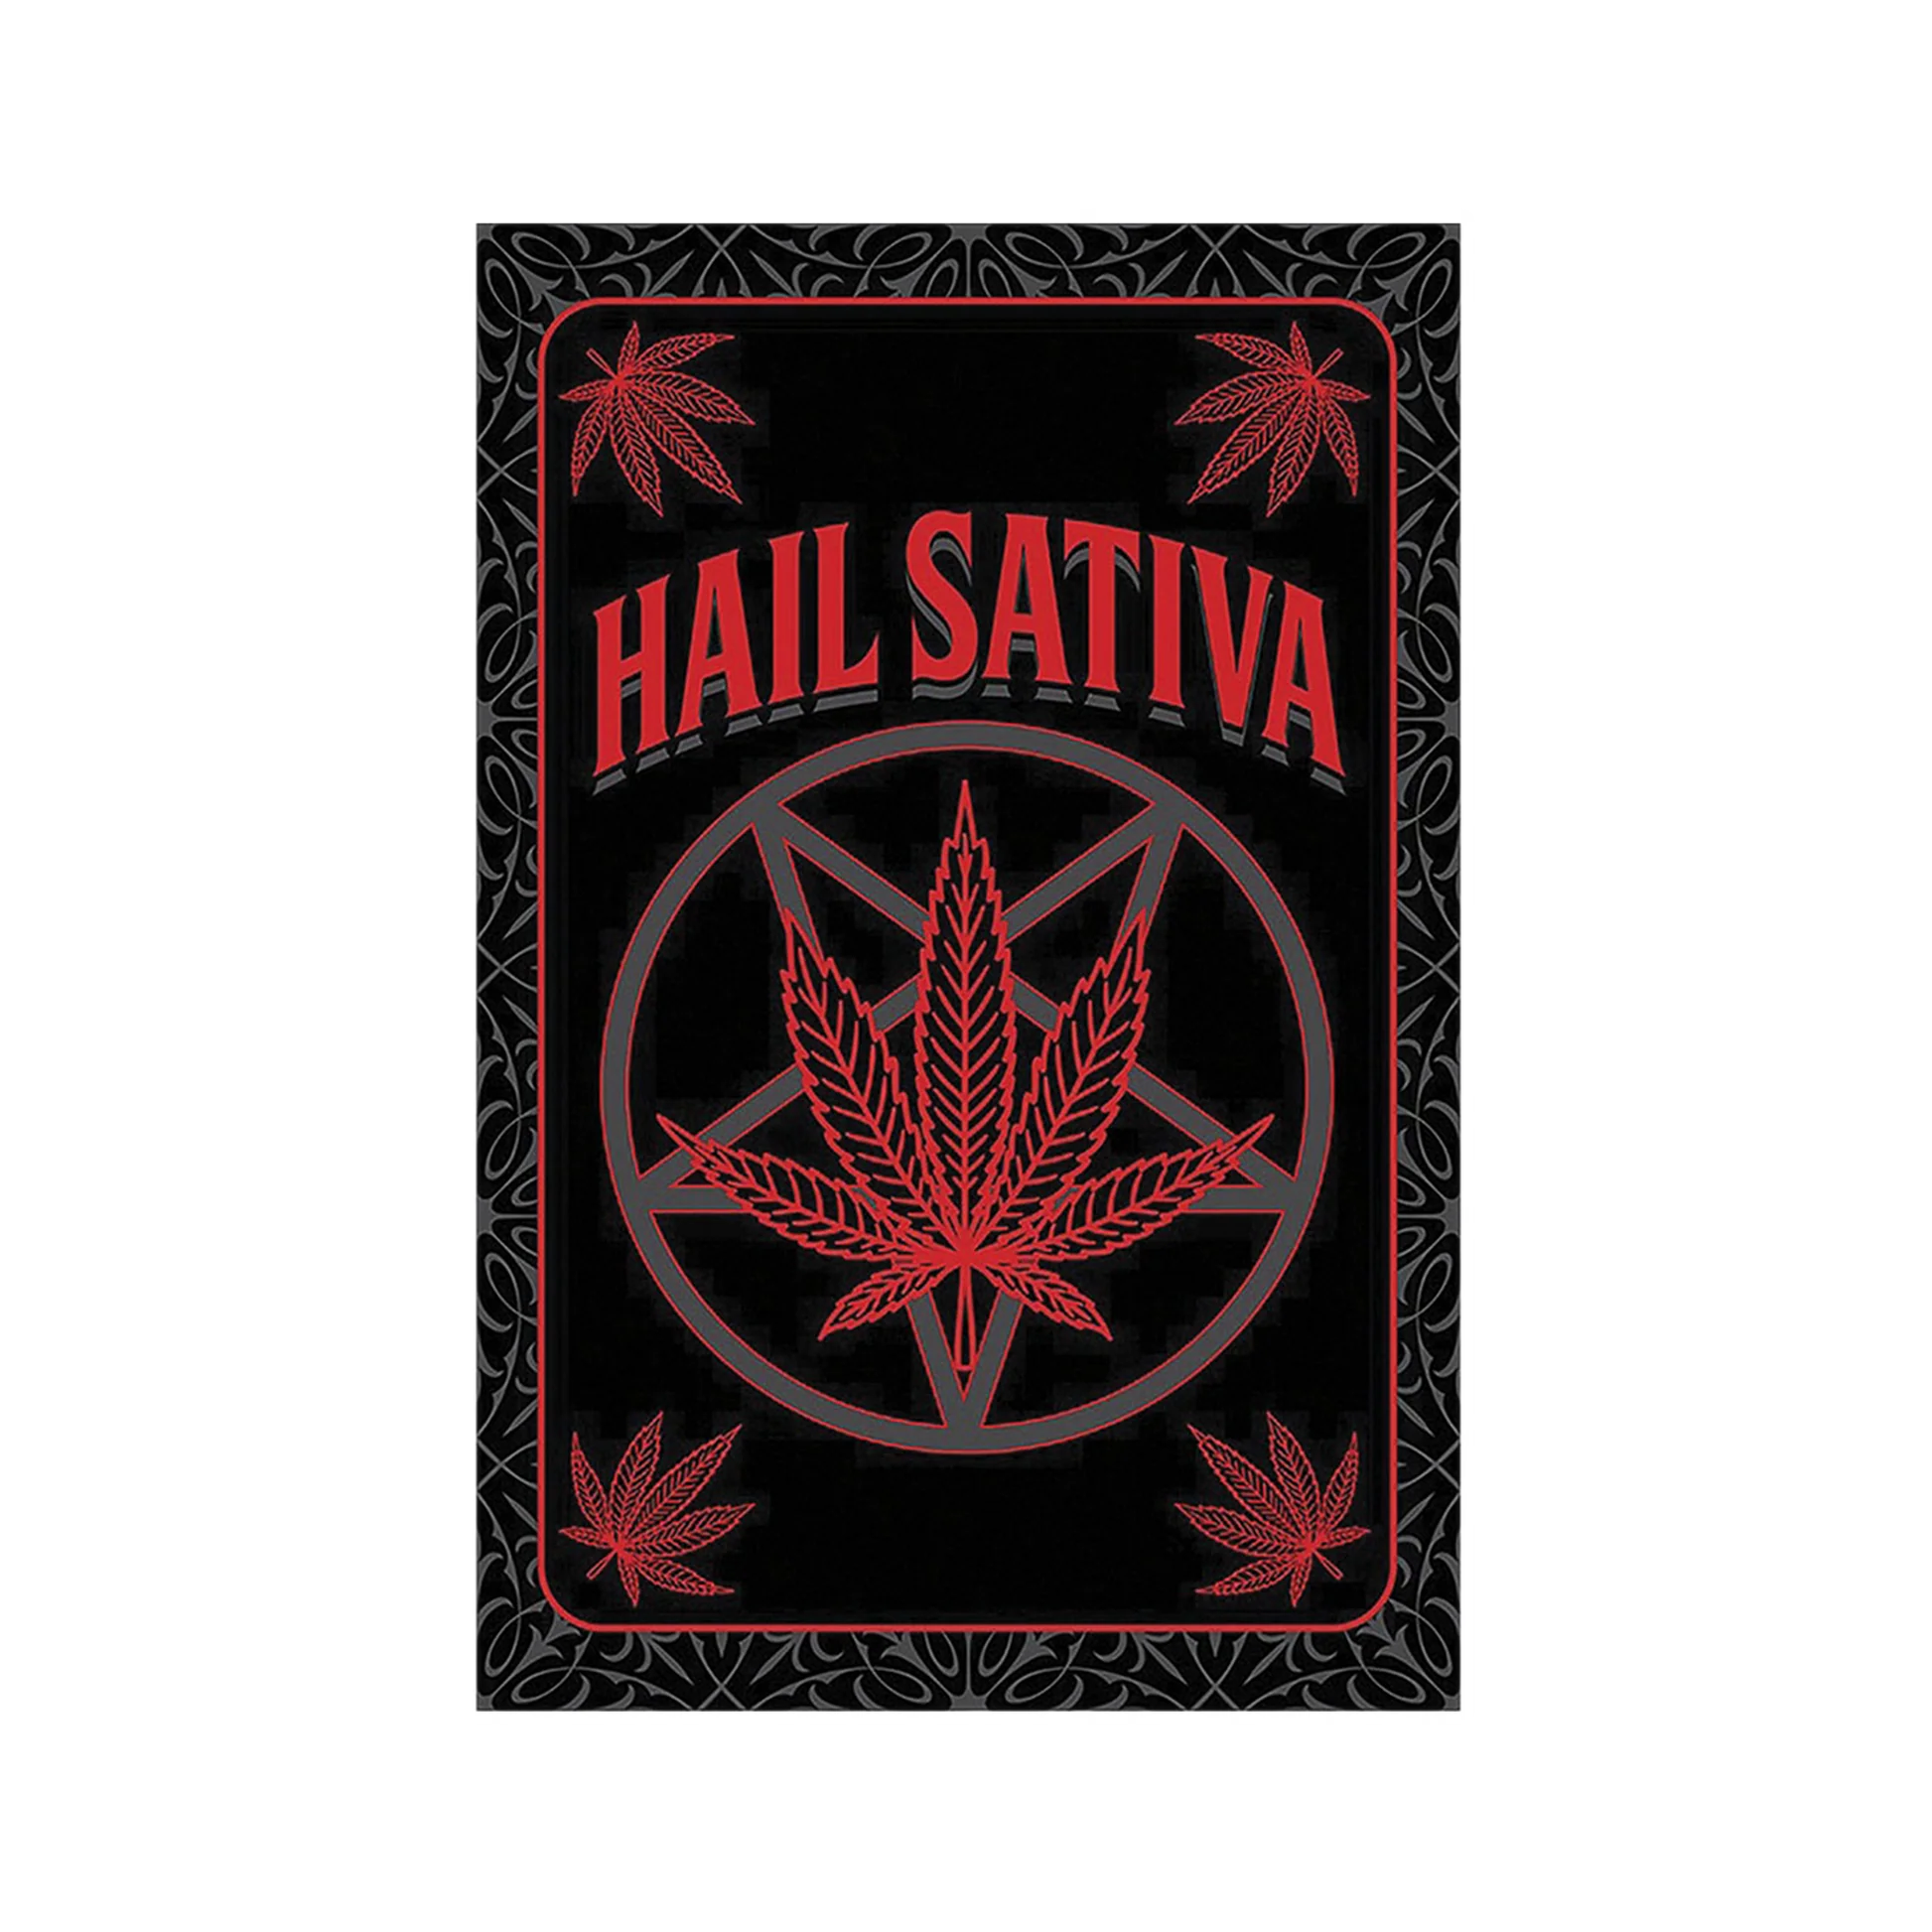 Sativa Cannabis - GrandLake420.com